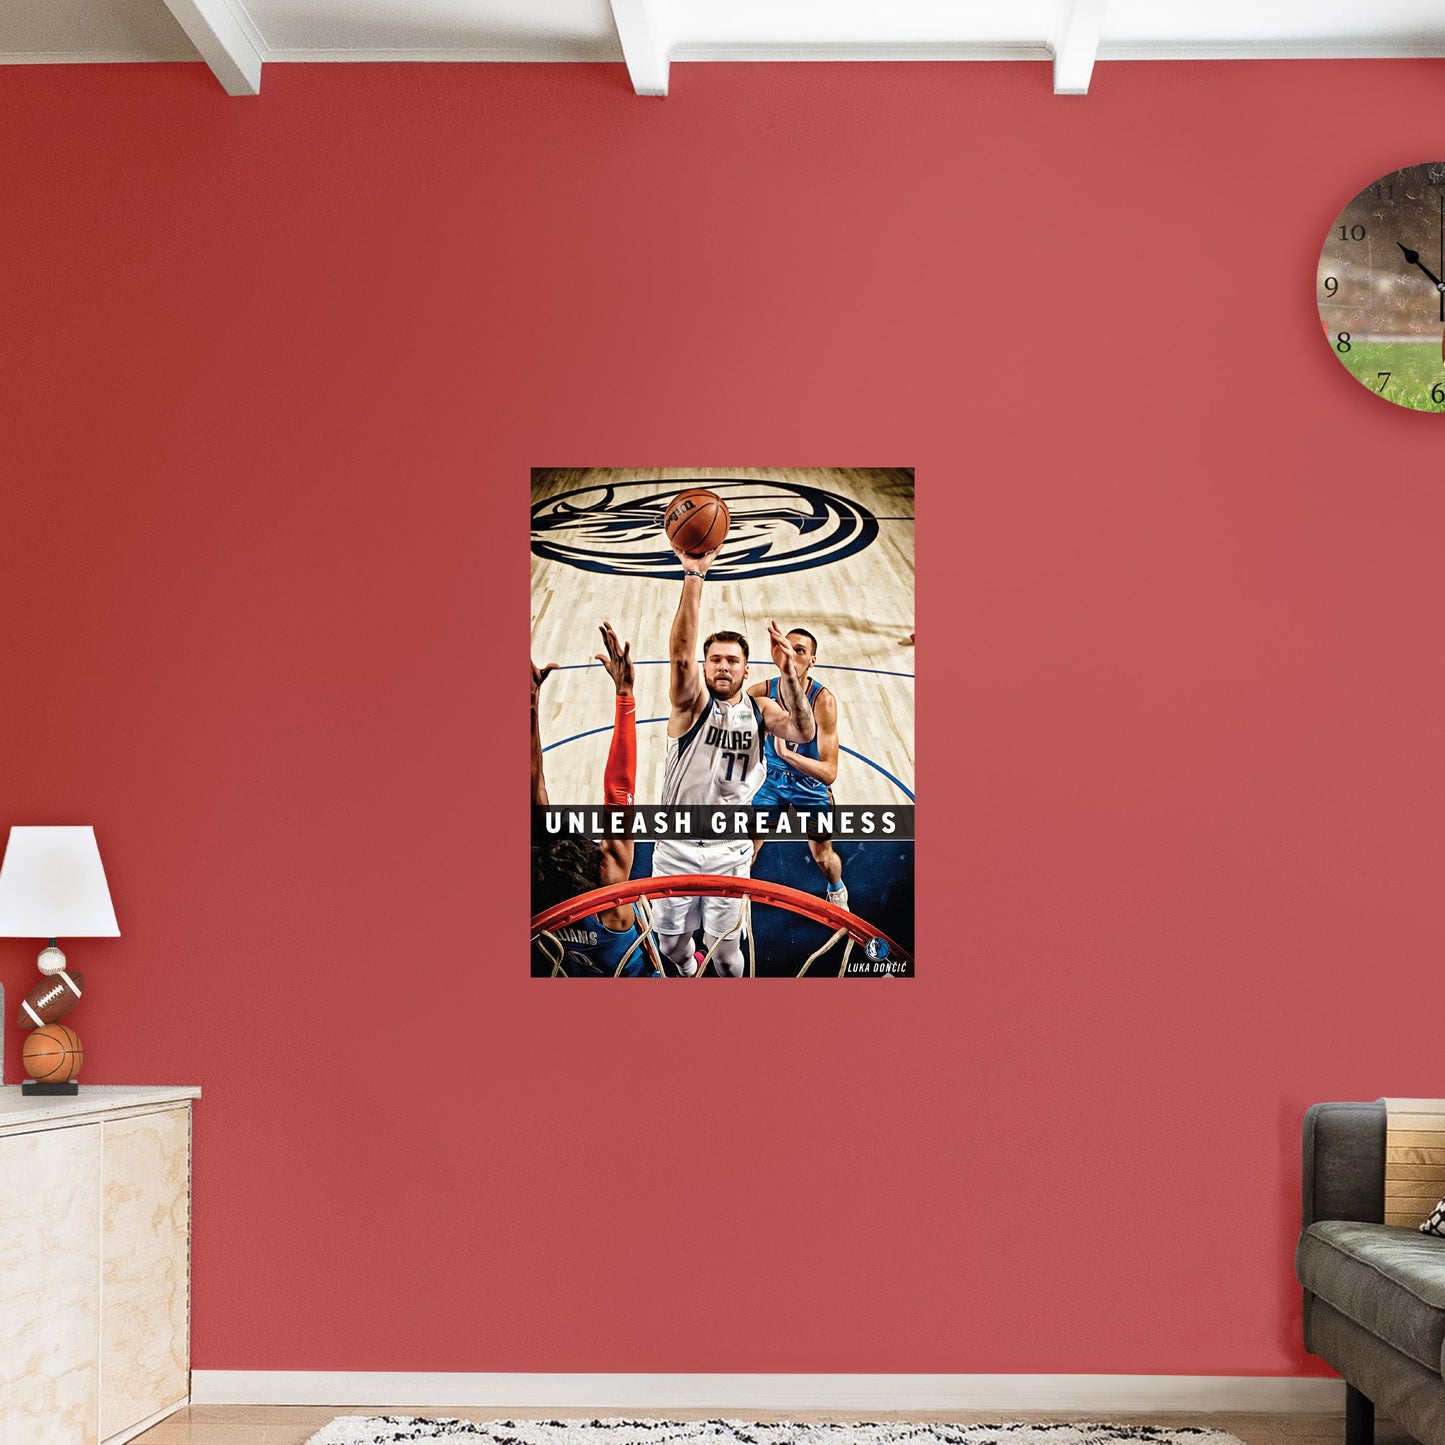 Dallas Mavericks: Luka Donƒçiƒá Scoring Motivational Poster - Officially Licensed NBA Removable Adhesive Decal